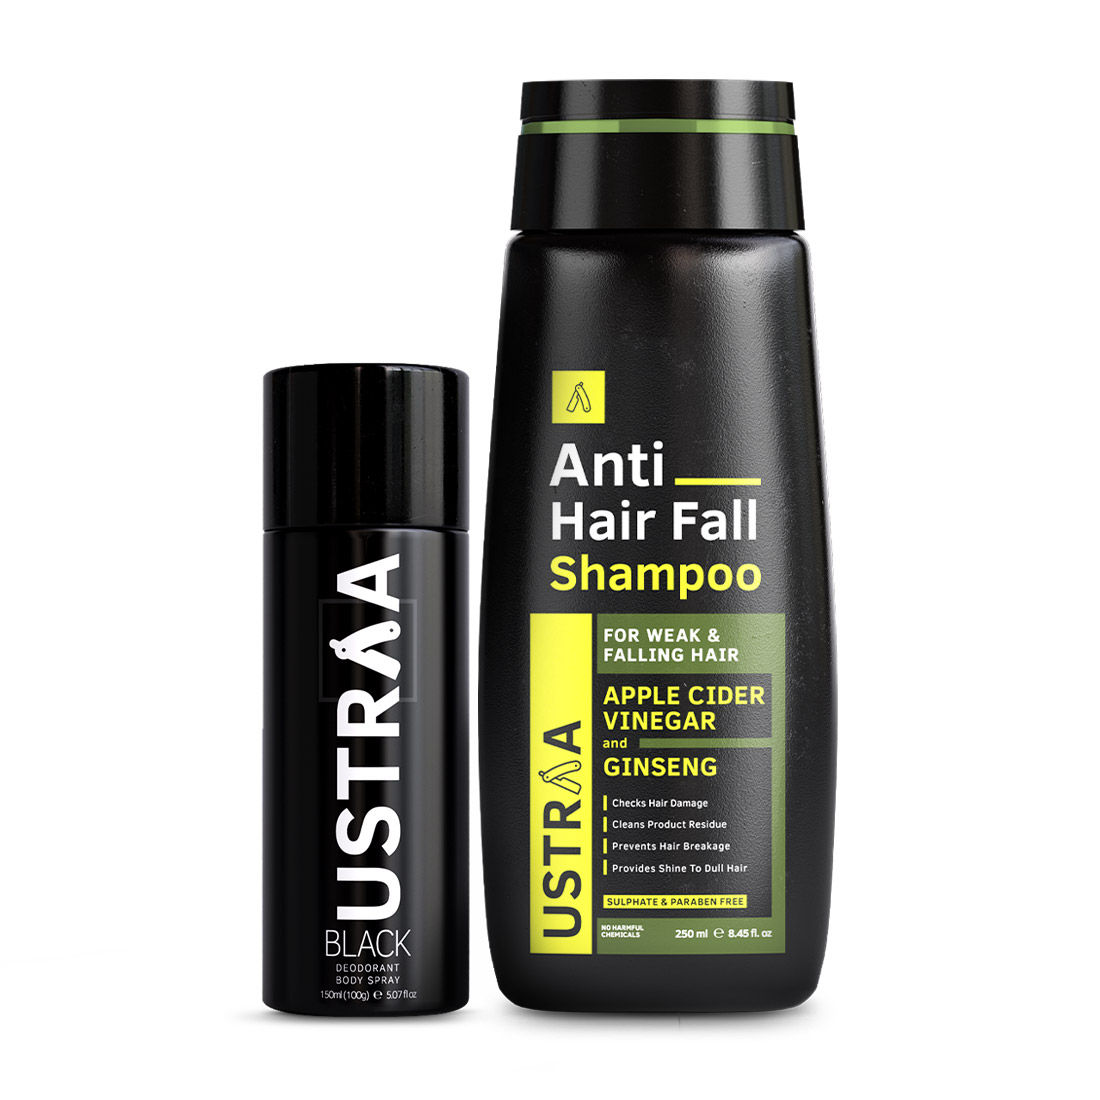 Ustraa Black Deodorant & Anti- Hair Fall Shampoo